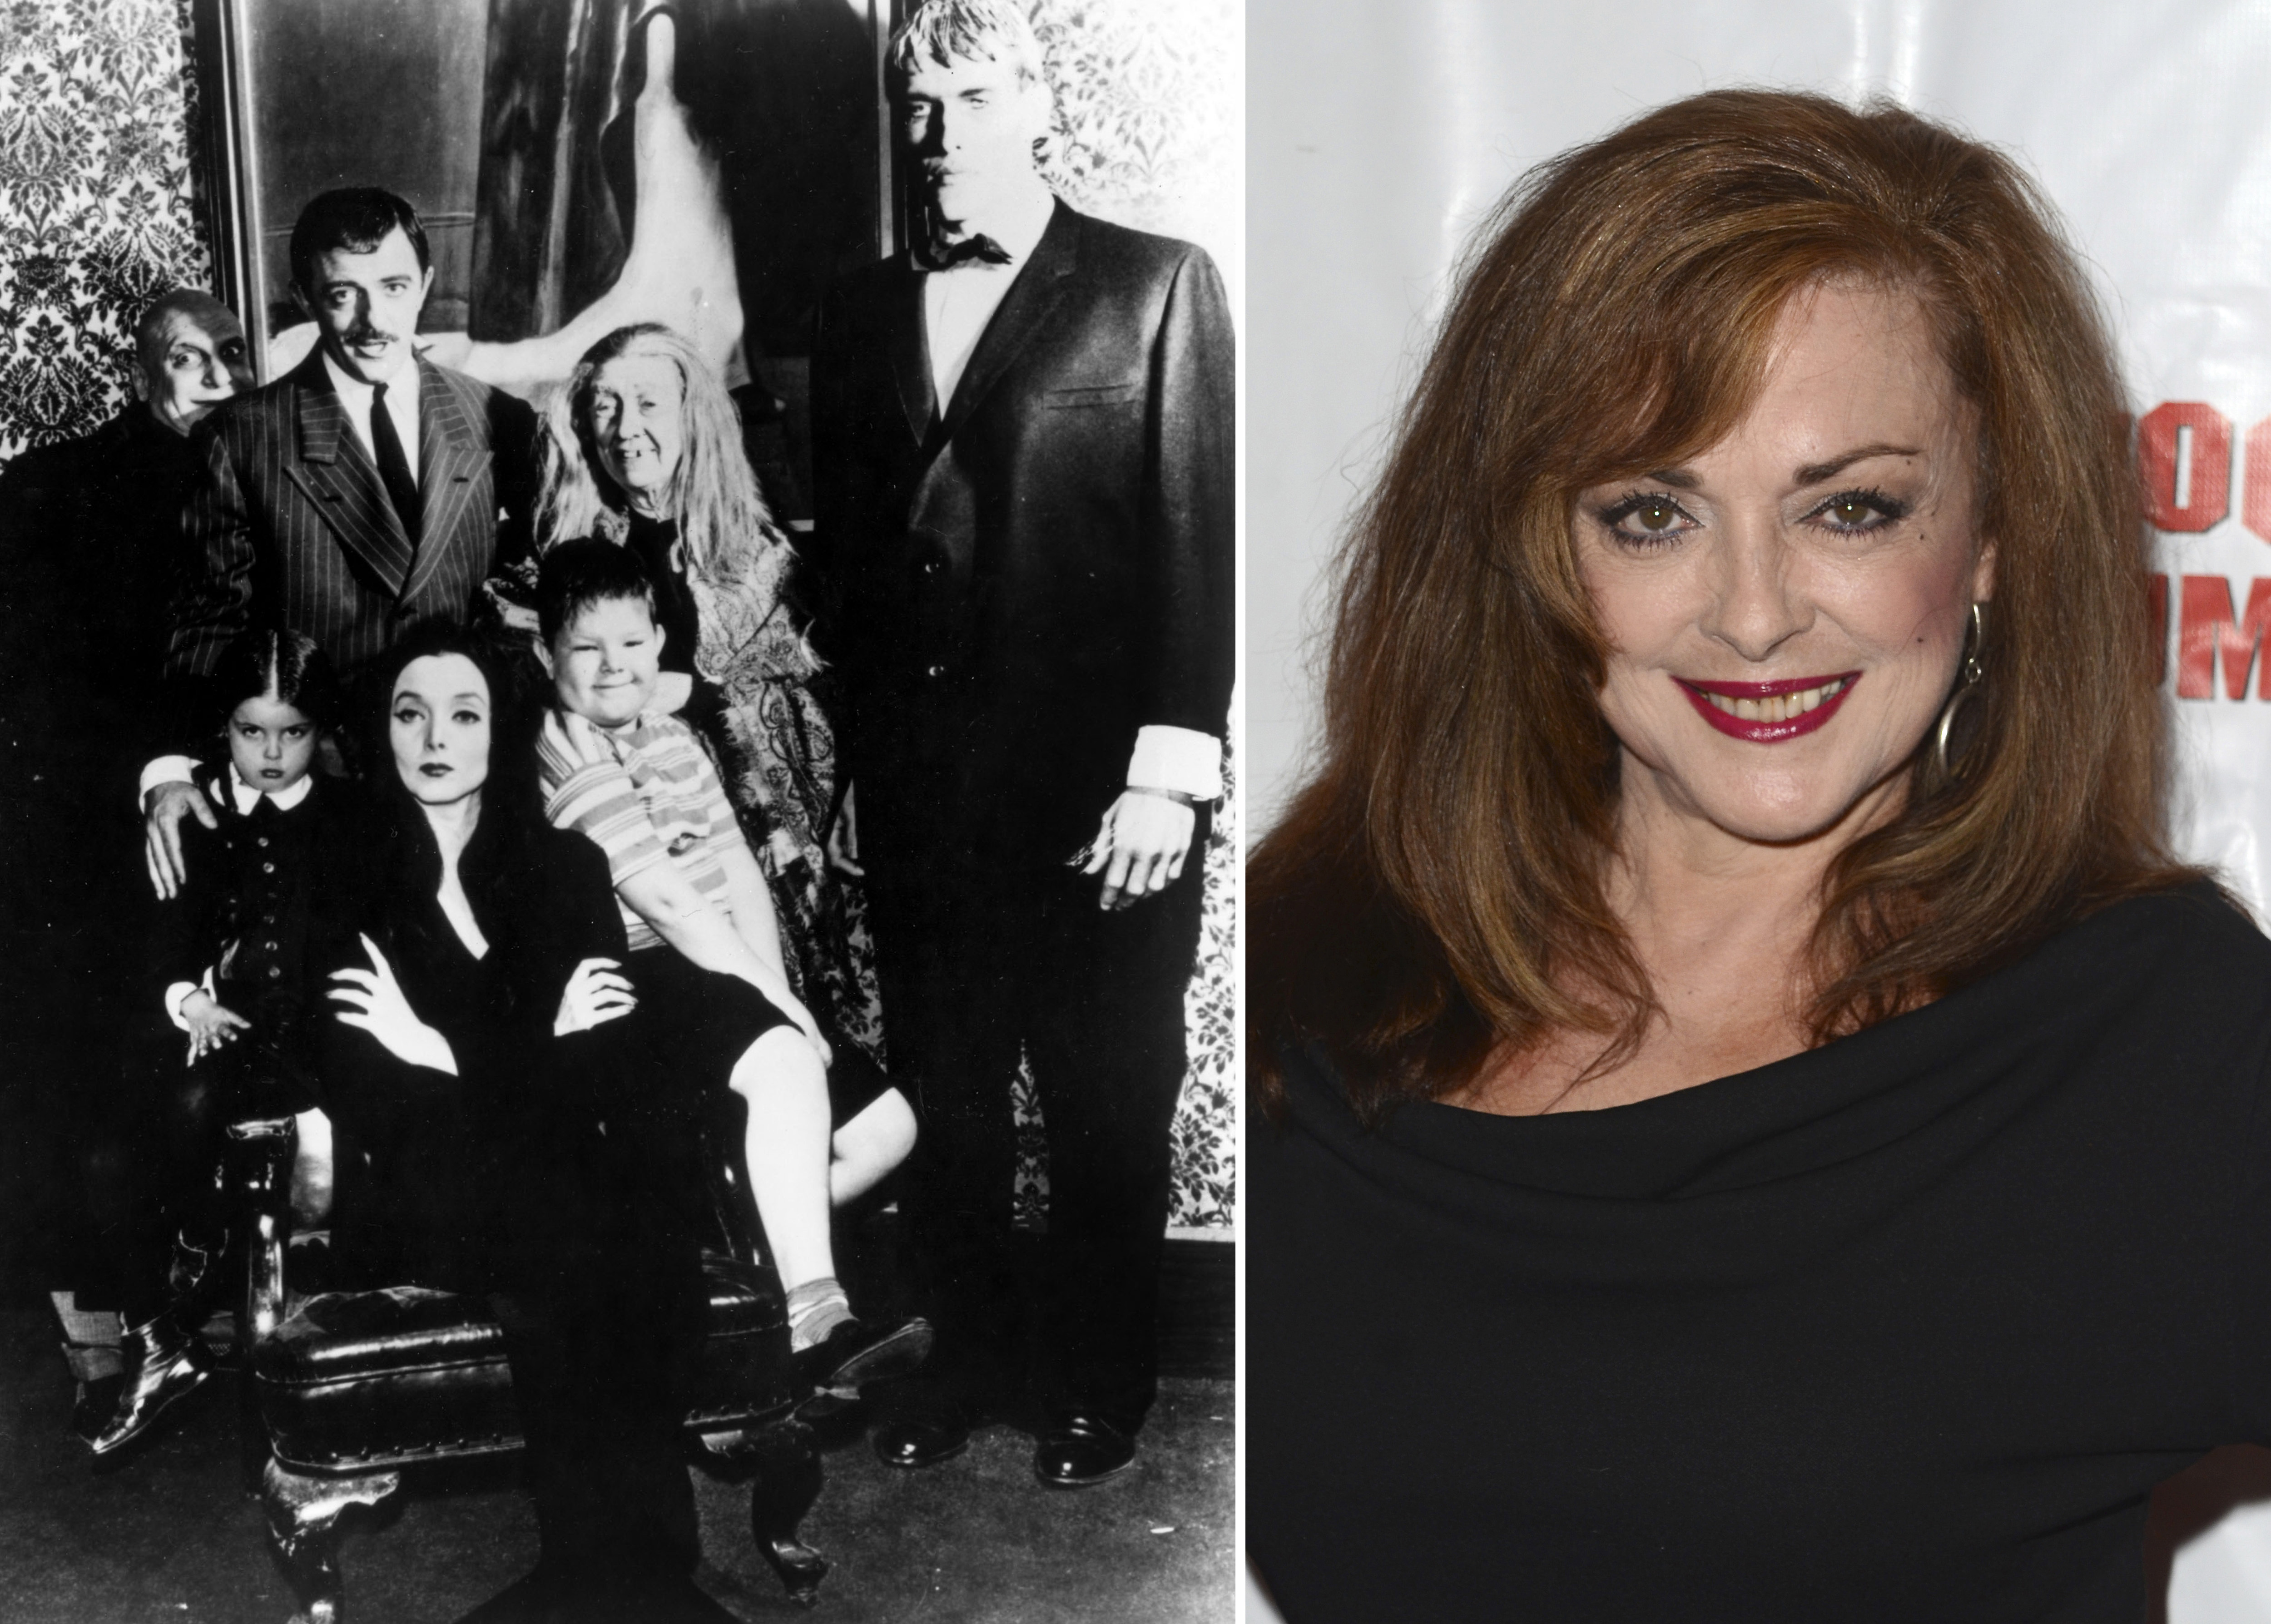 Lisa Loring, original 'Wednesday Addams' actress, dies at 64